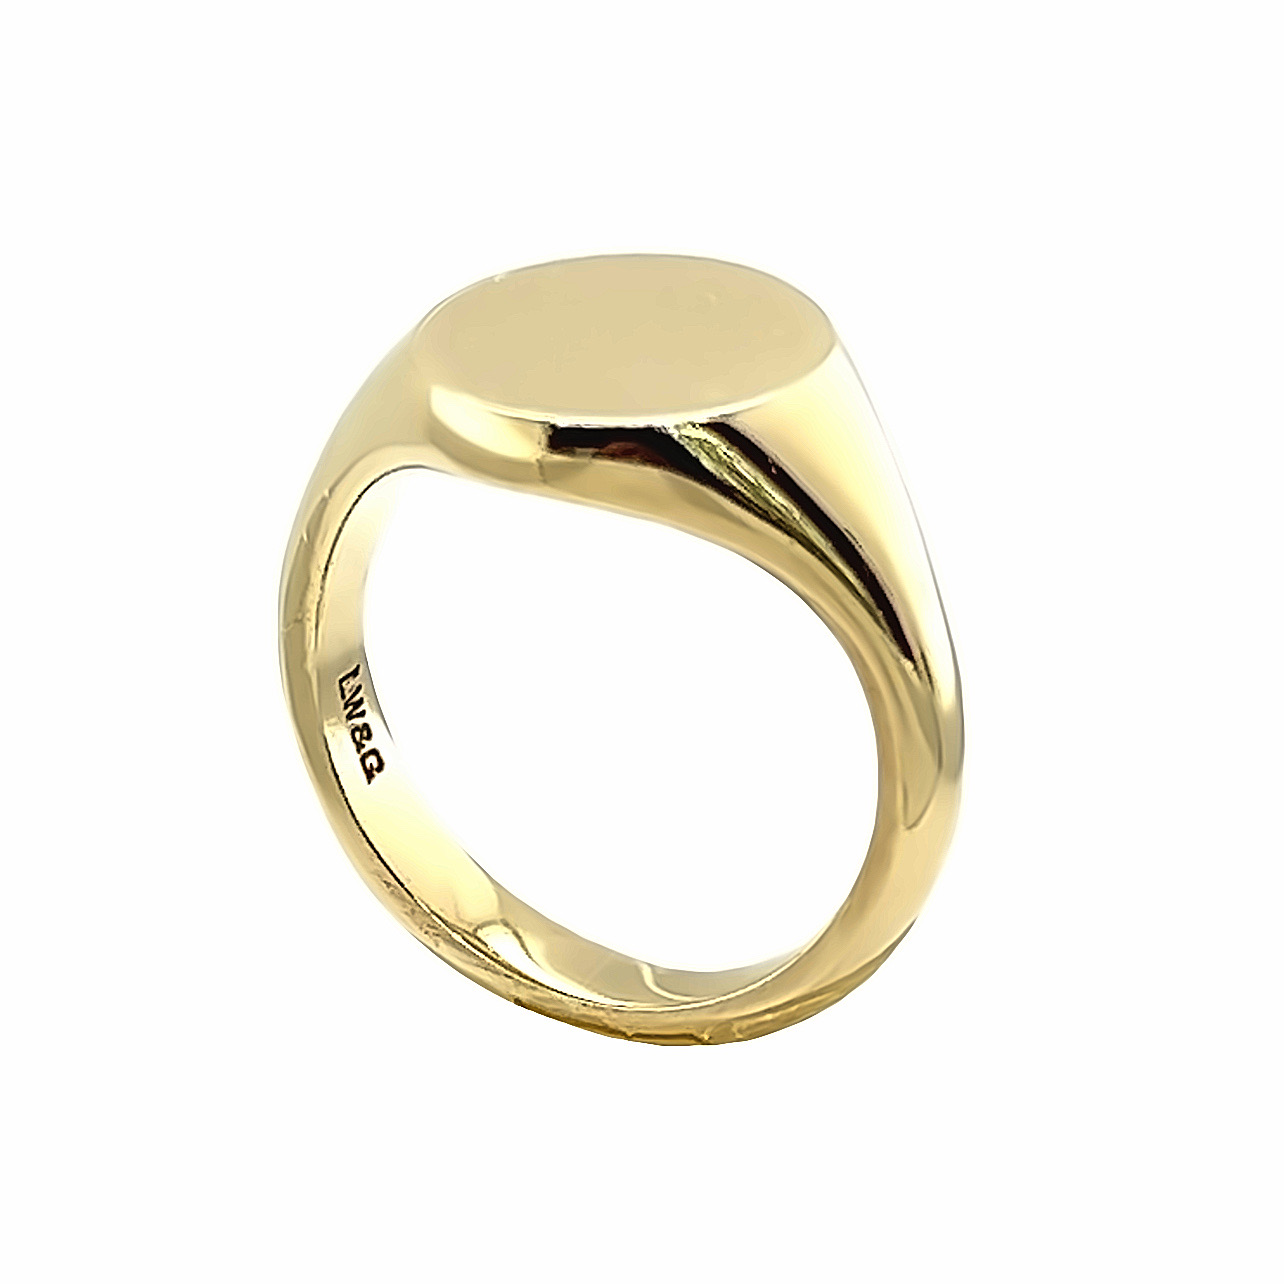 Mens Gold Diamond Engagement Ring - 1 1/2 Carat Diamond